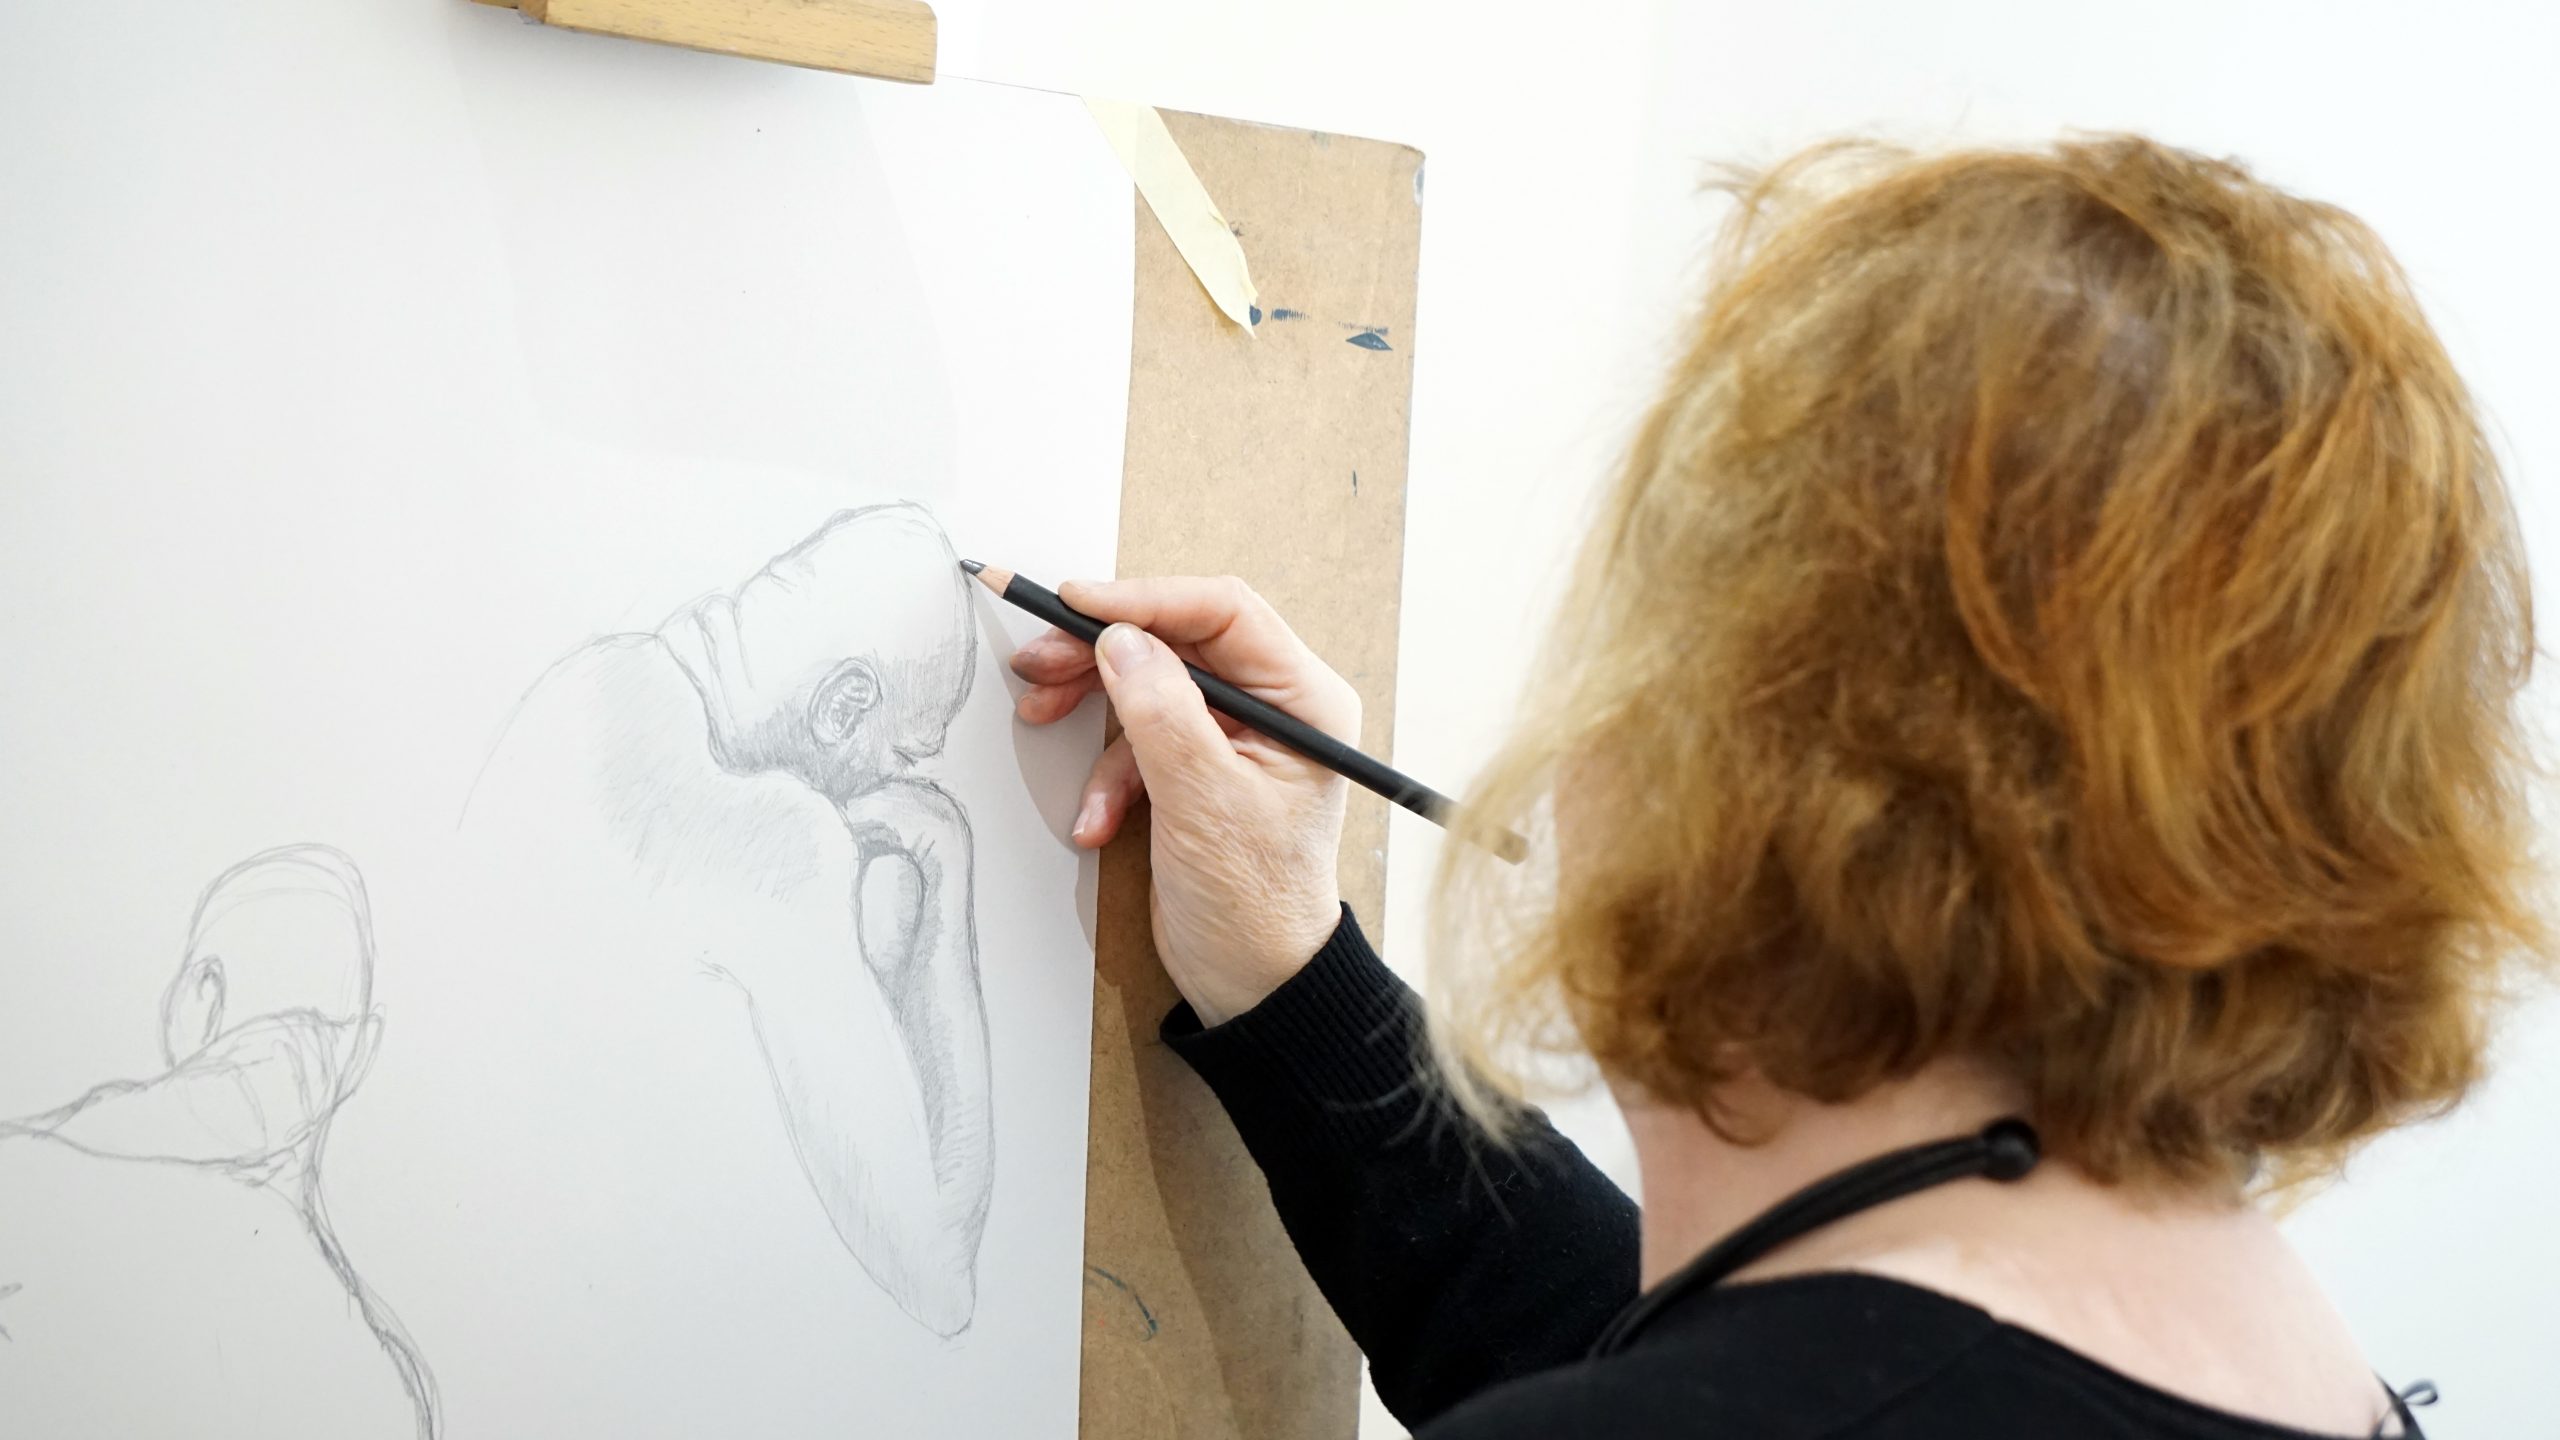 Life Drawing Studio Workshop with Paul Bartlett RBSA, February 2023